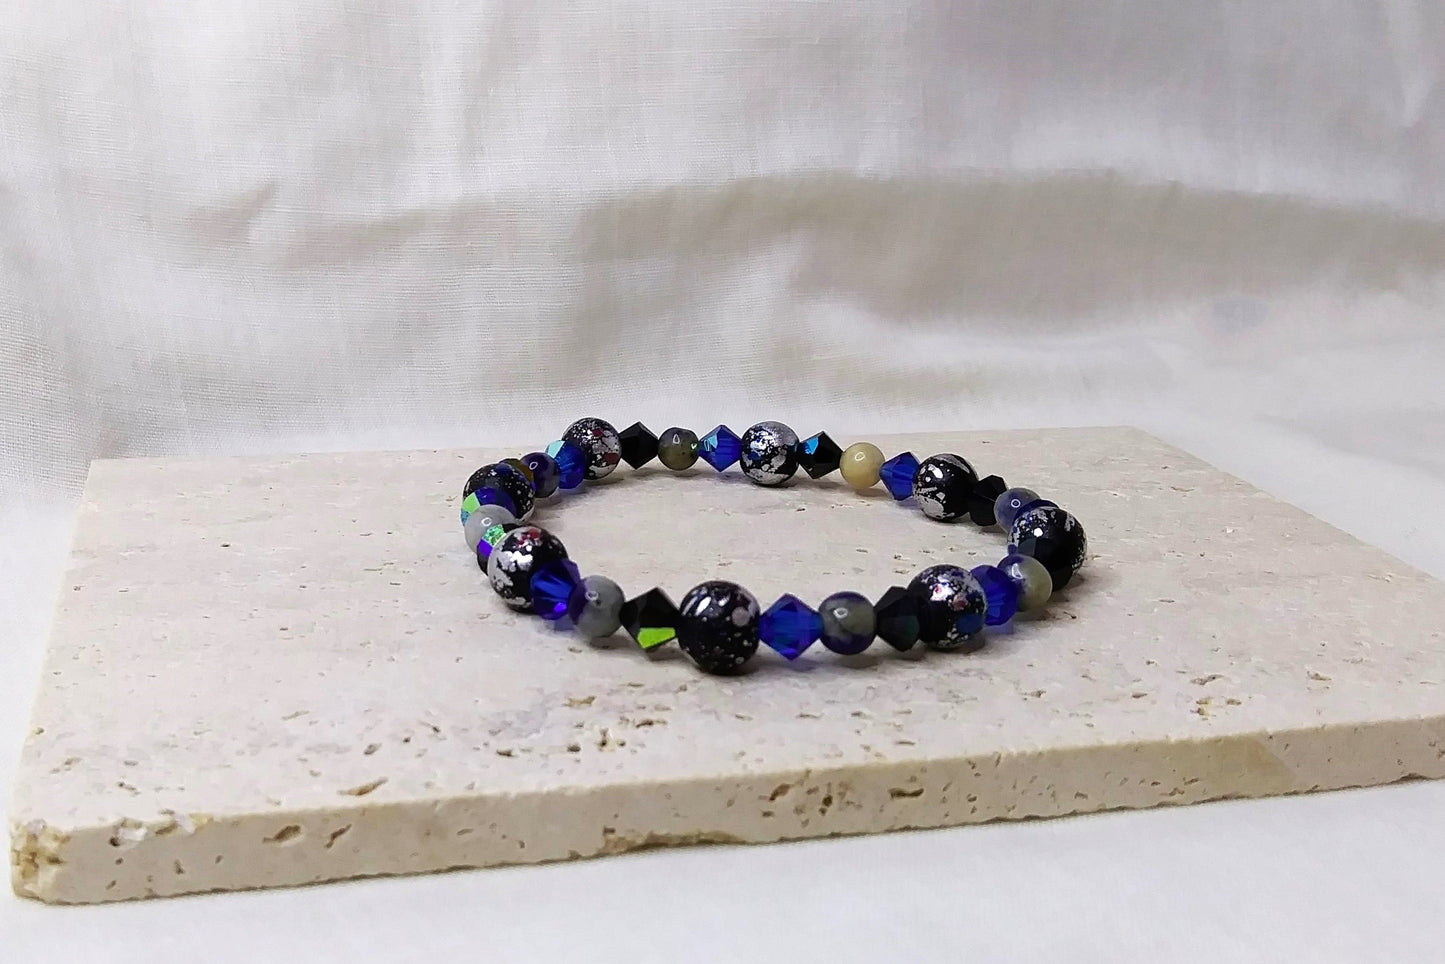 Blue Glass Beads and Sodalite Beads stretch bracelet